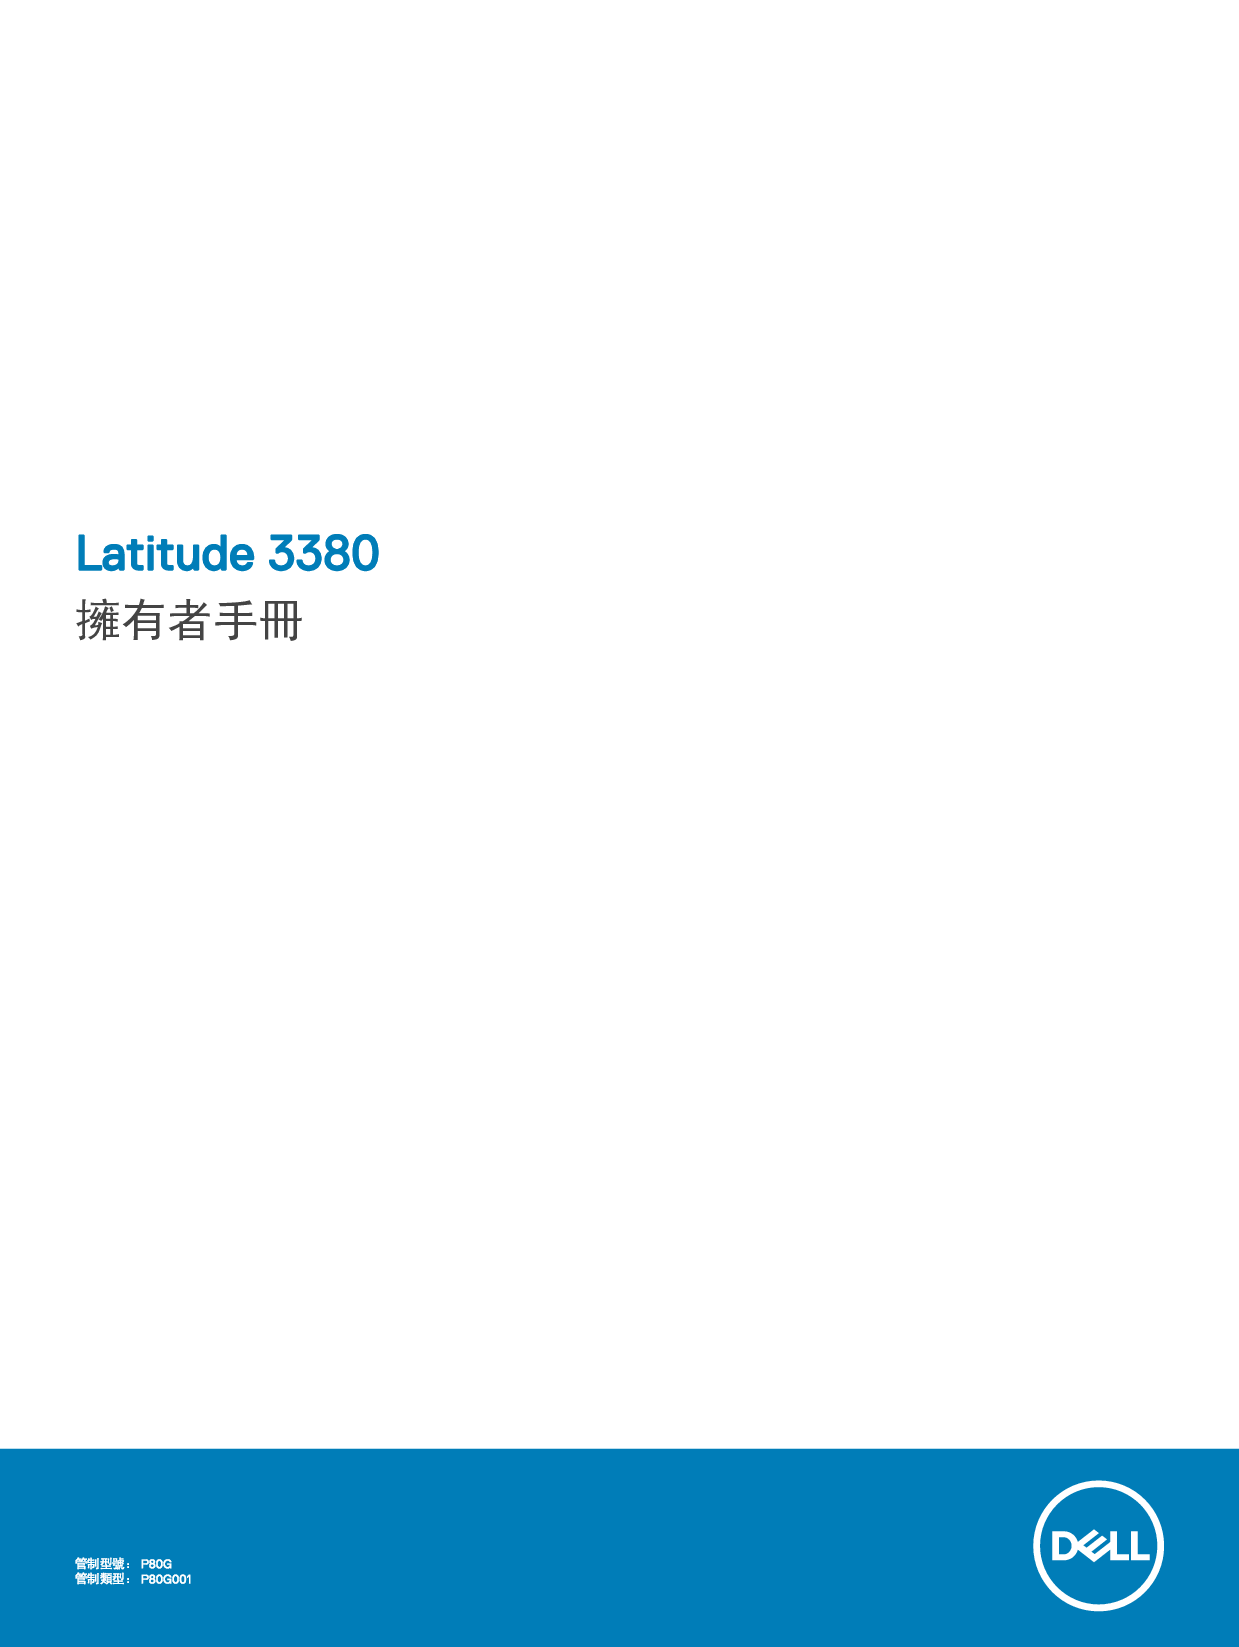 戴尔 Dell Latitude 3380 繁体 用户手册 封面